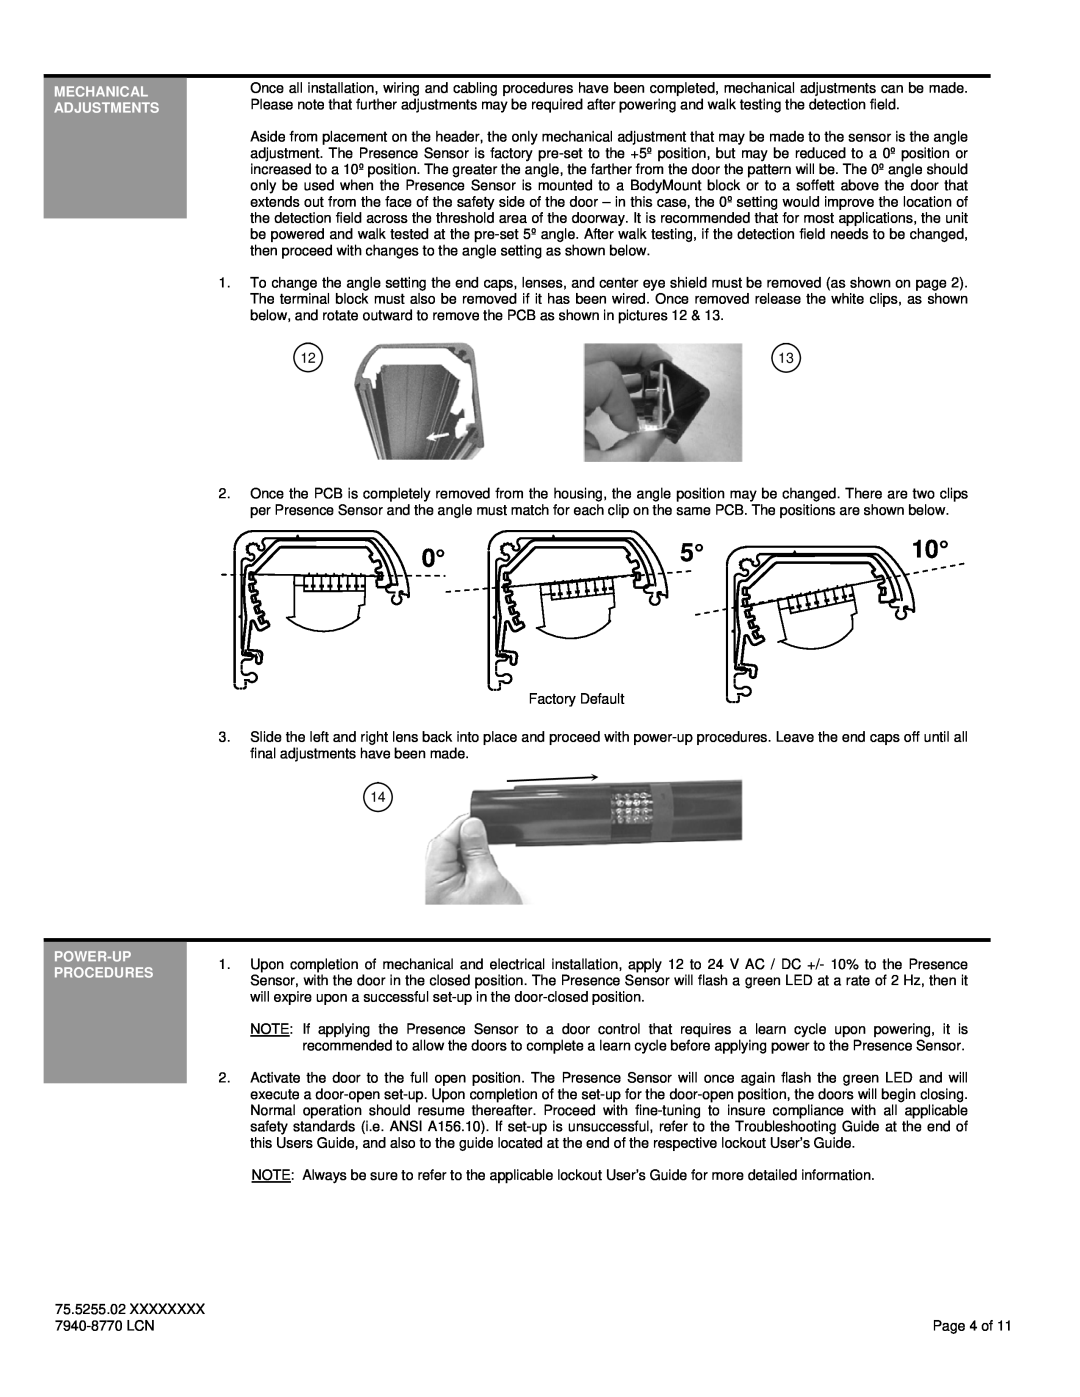 Ingersoll-Rand 7940-8770 installation instructions Mechanical Adjustments, Power-Upprocedures 